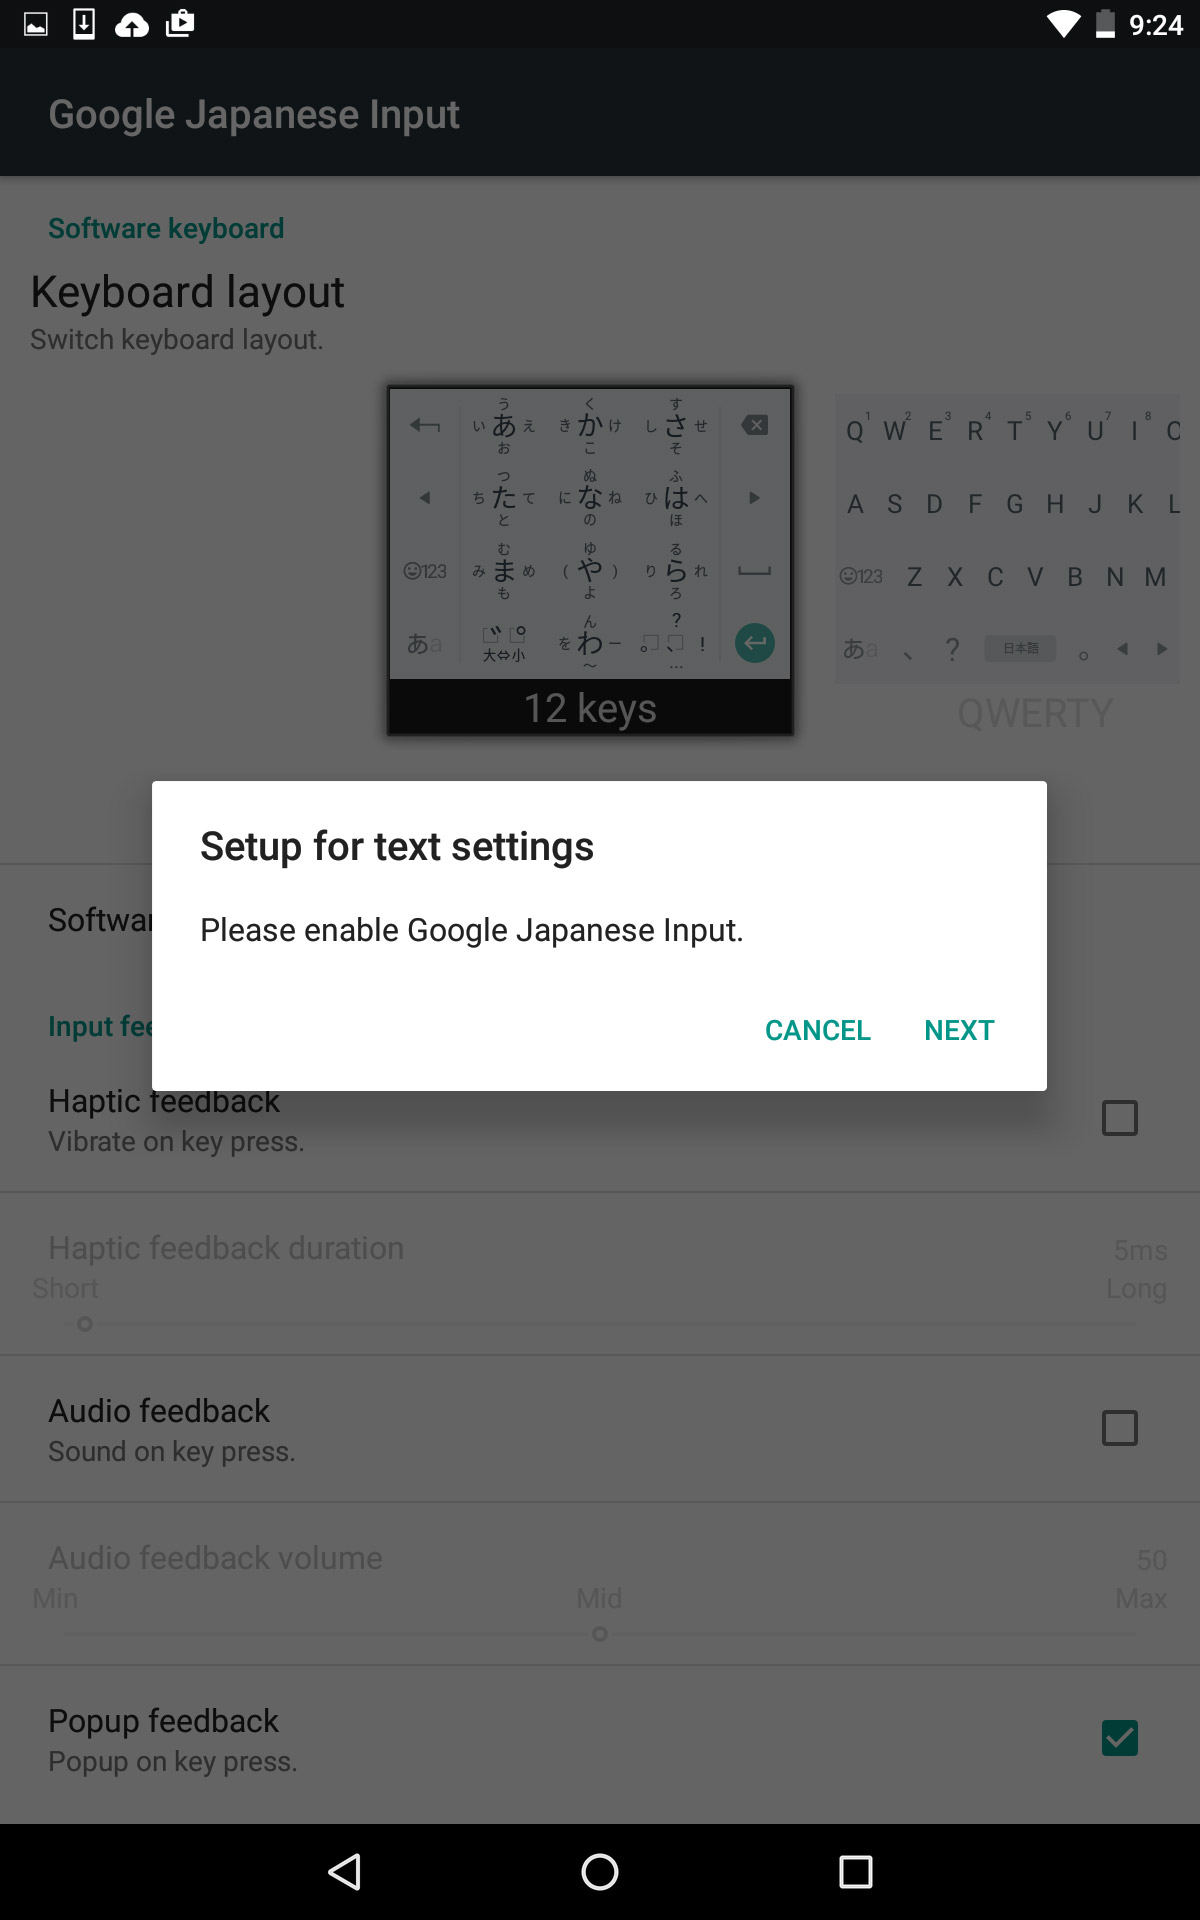 window asking to enable google japanese input